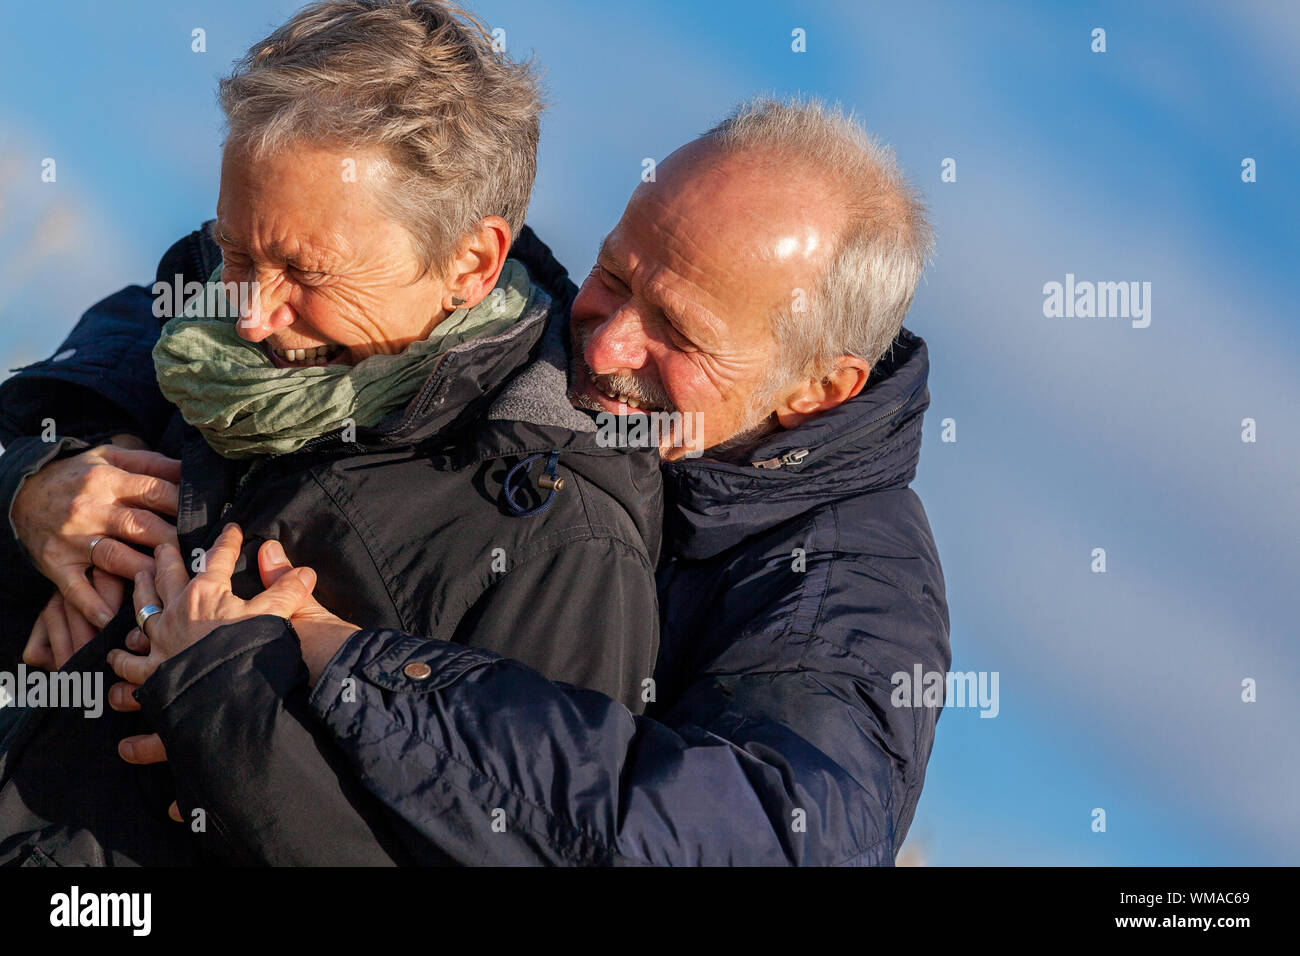 Elderly couple embracing and celebrating the sun Stock Photo